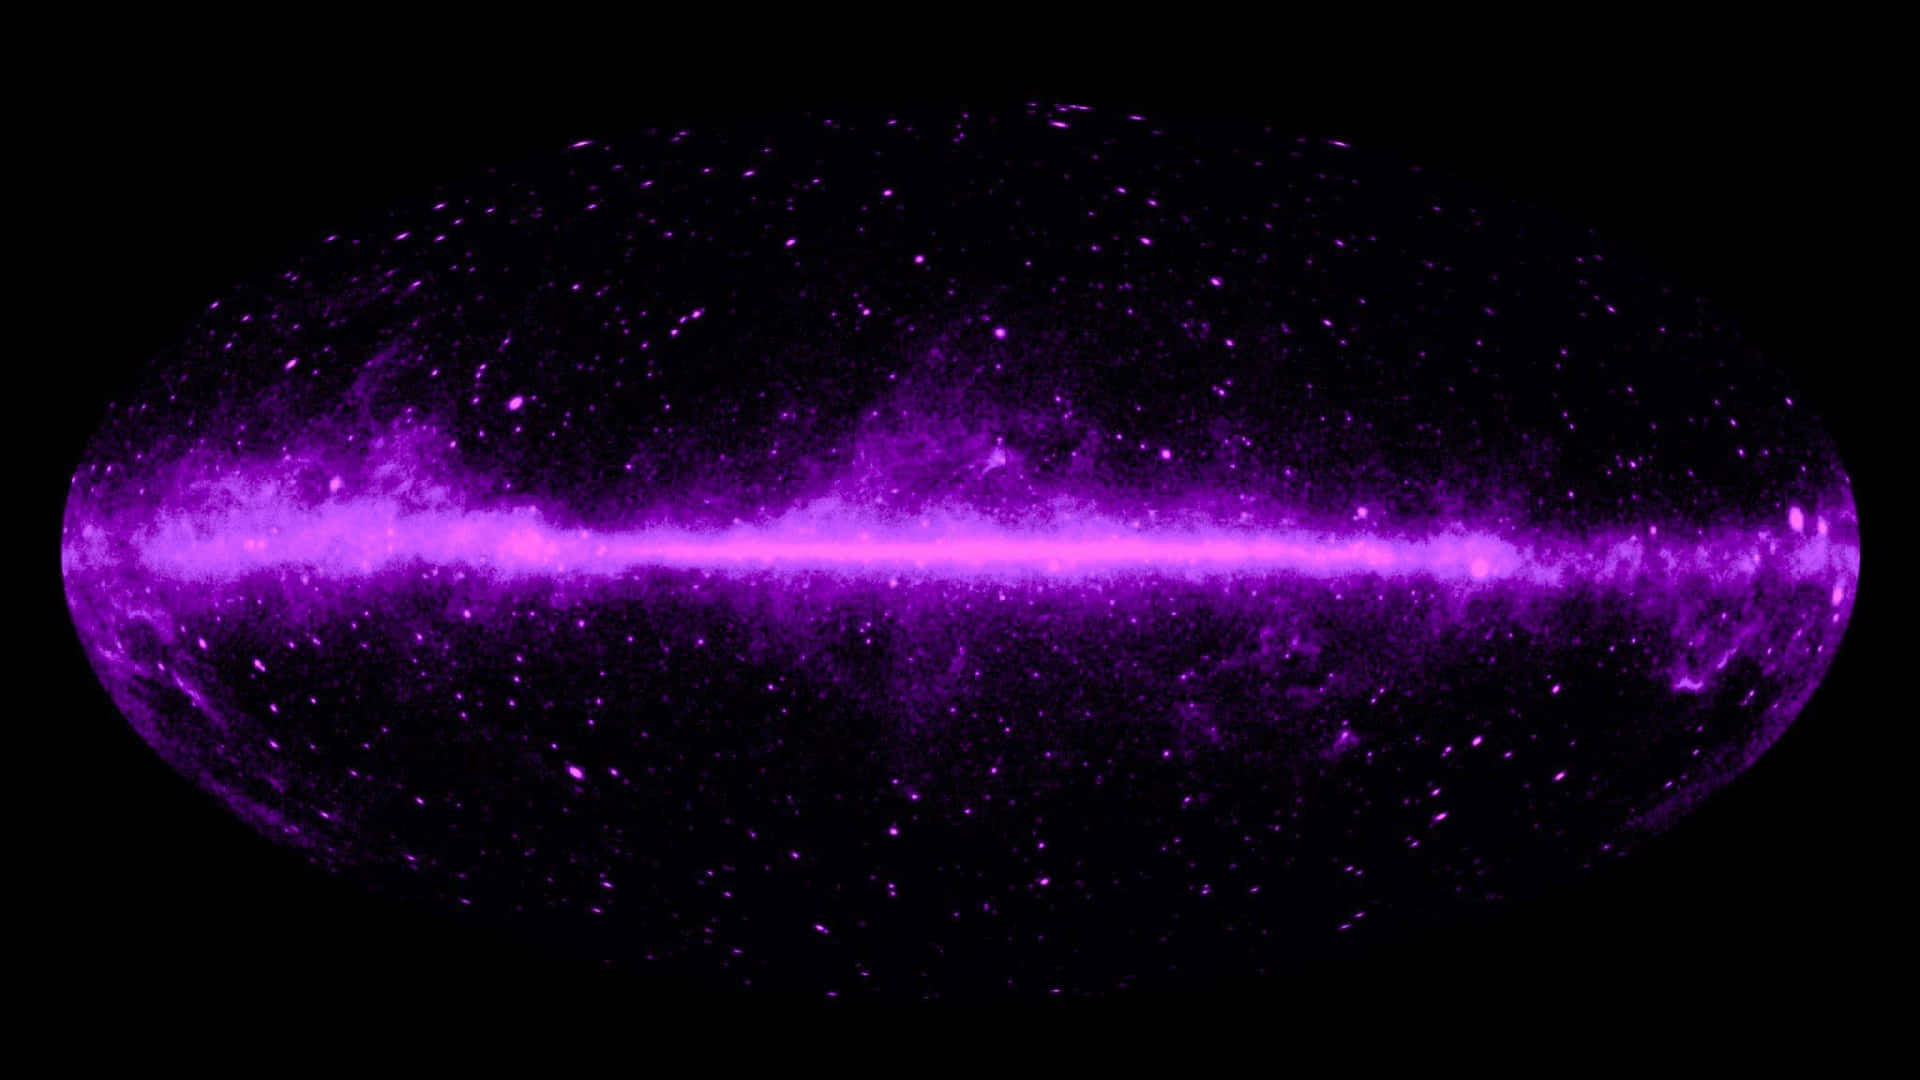 A Purple Galaxy With Stars In It Wallpaper